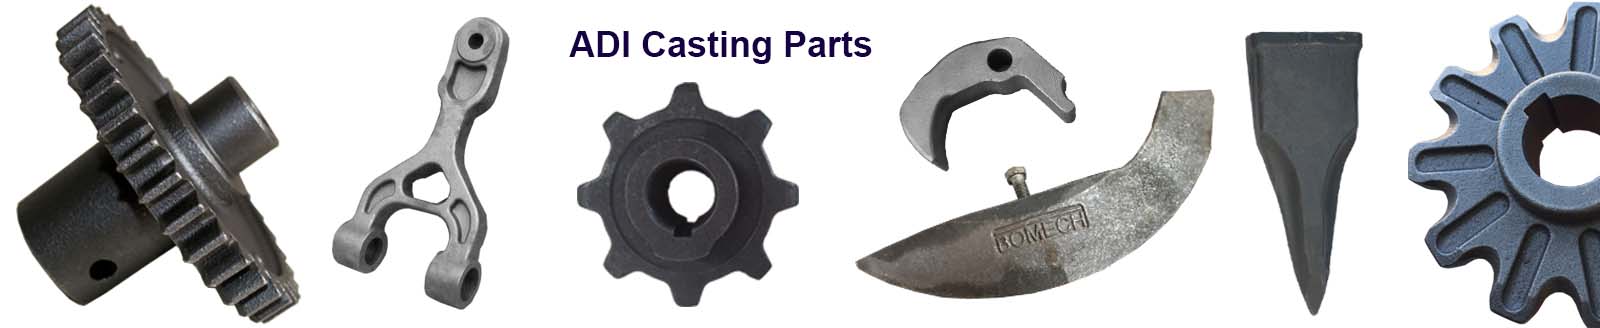 linkup adi casting parts 1600 328